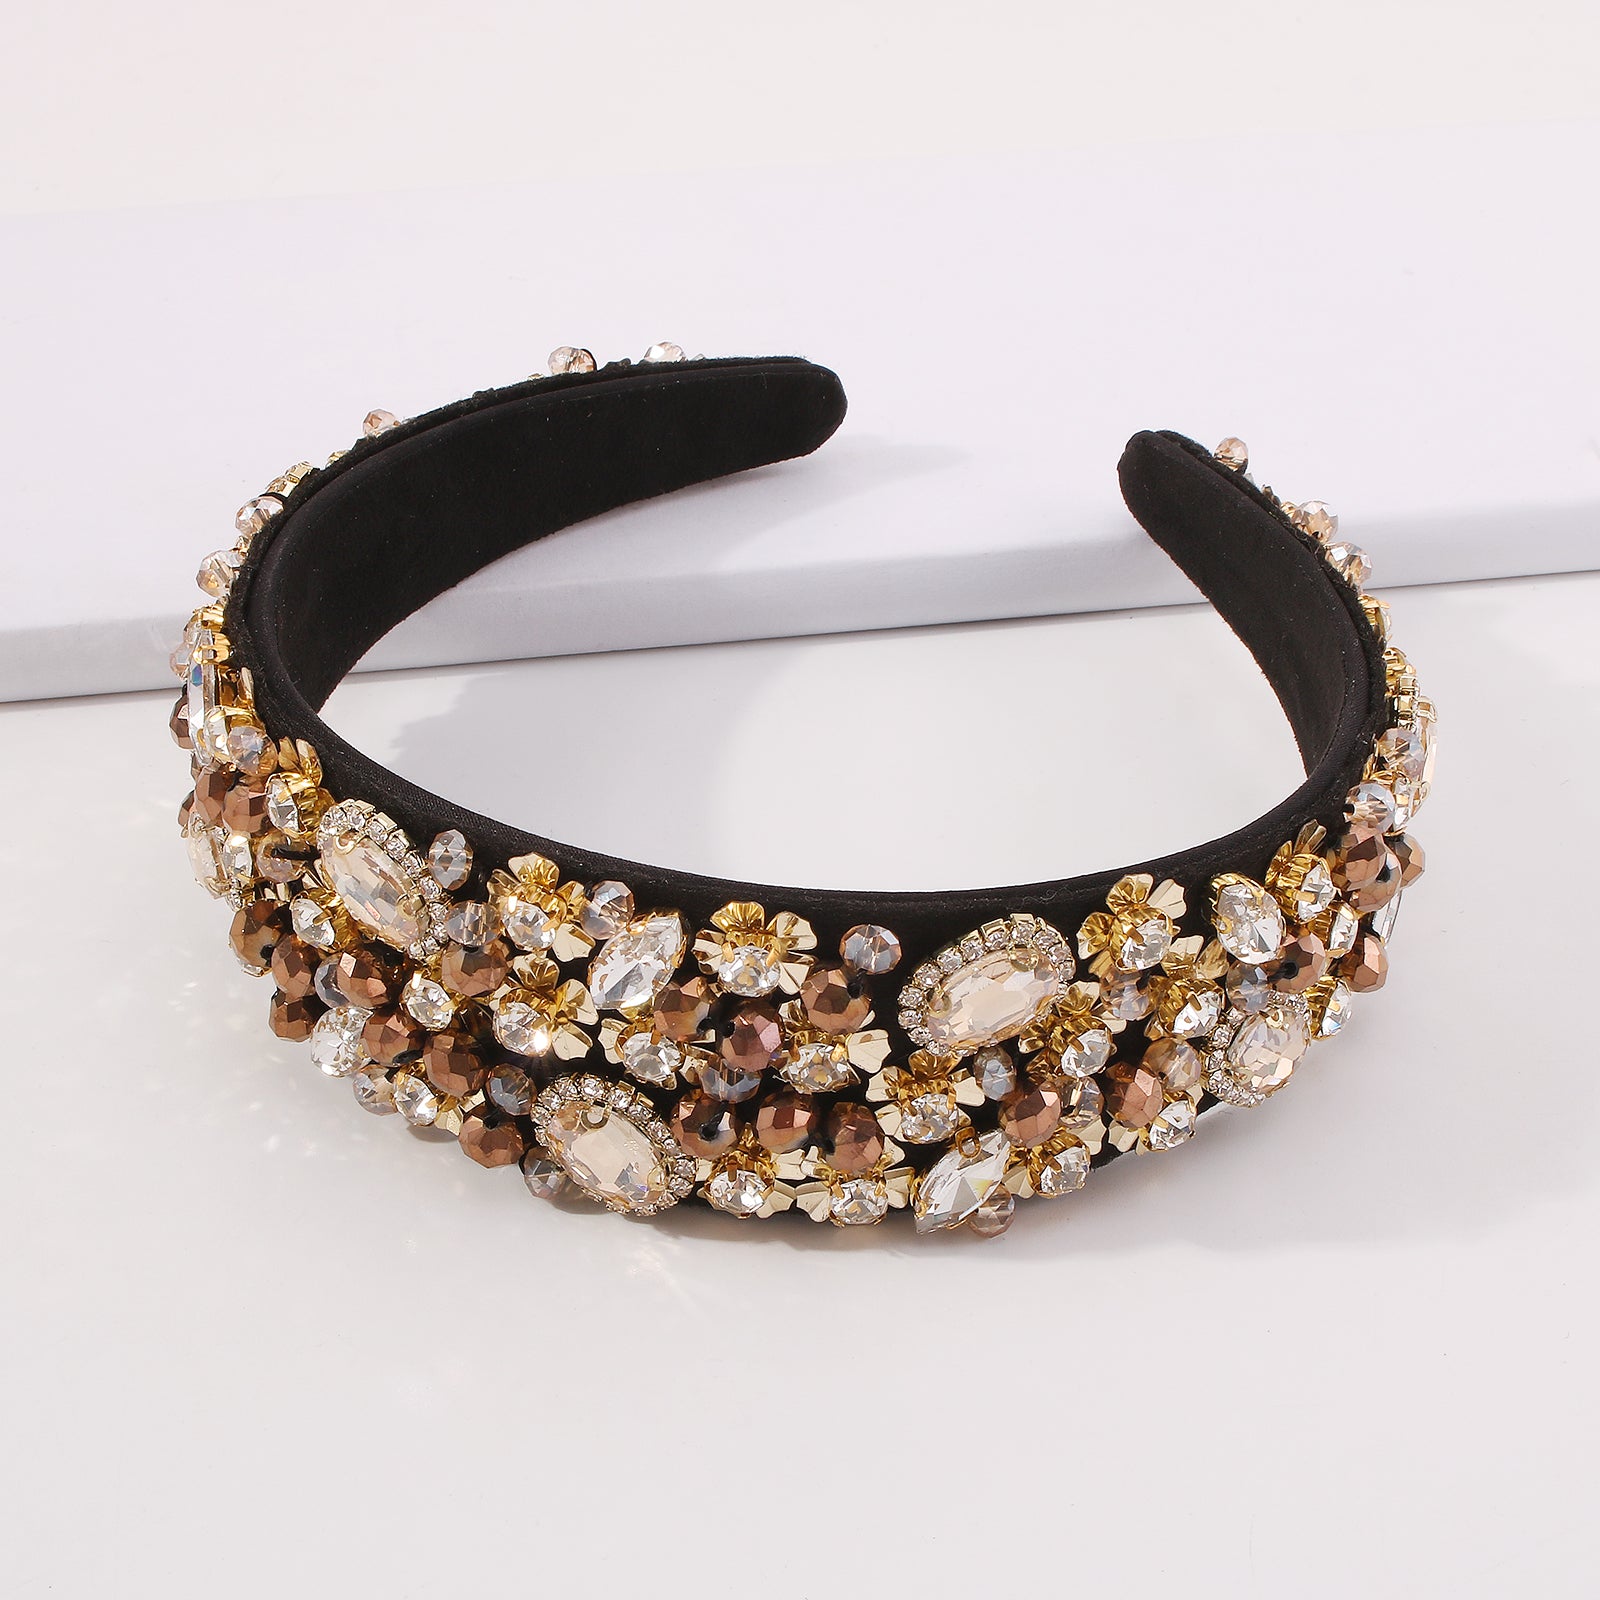 Floral Embellished Luxurious Headbands, Christmas Holiday Headbands medyjewelry